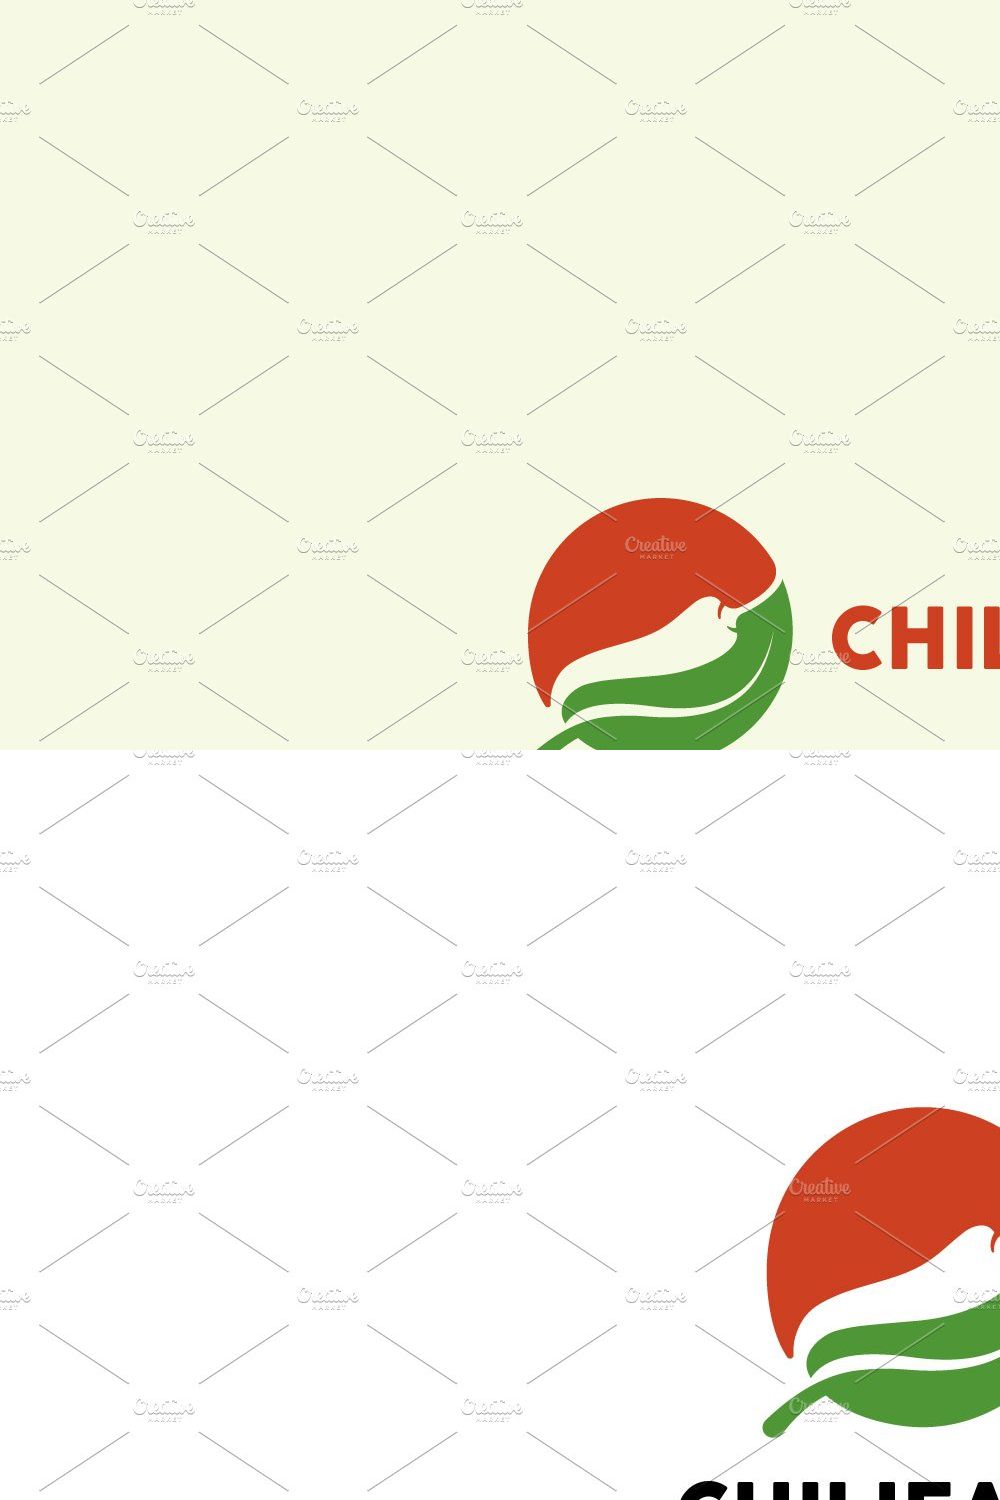 chili farm logo pinterest preview image.